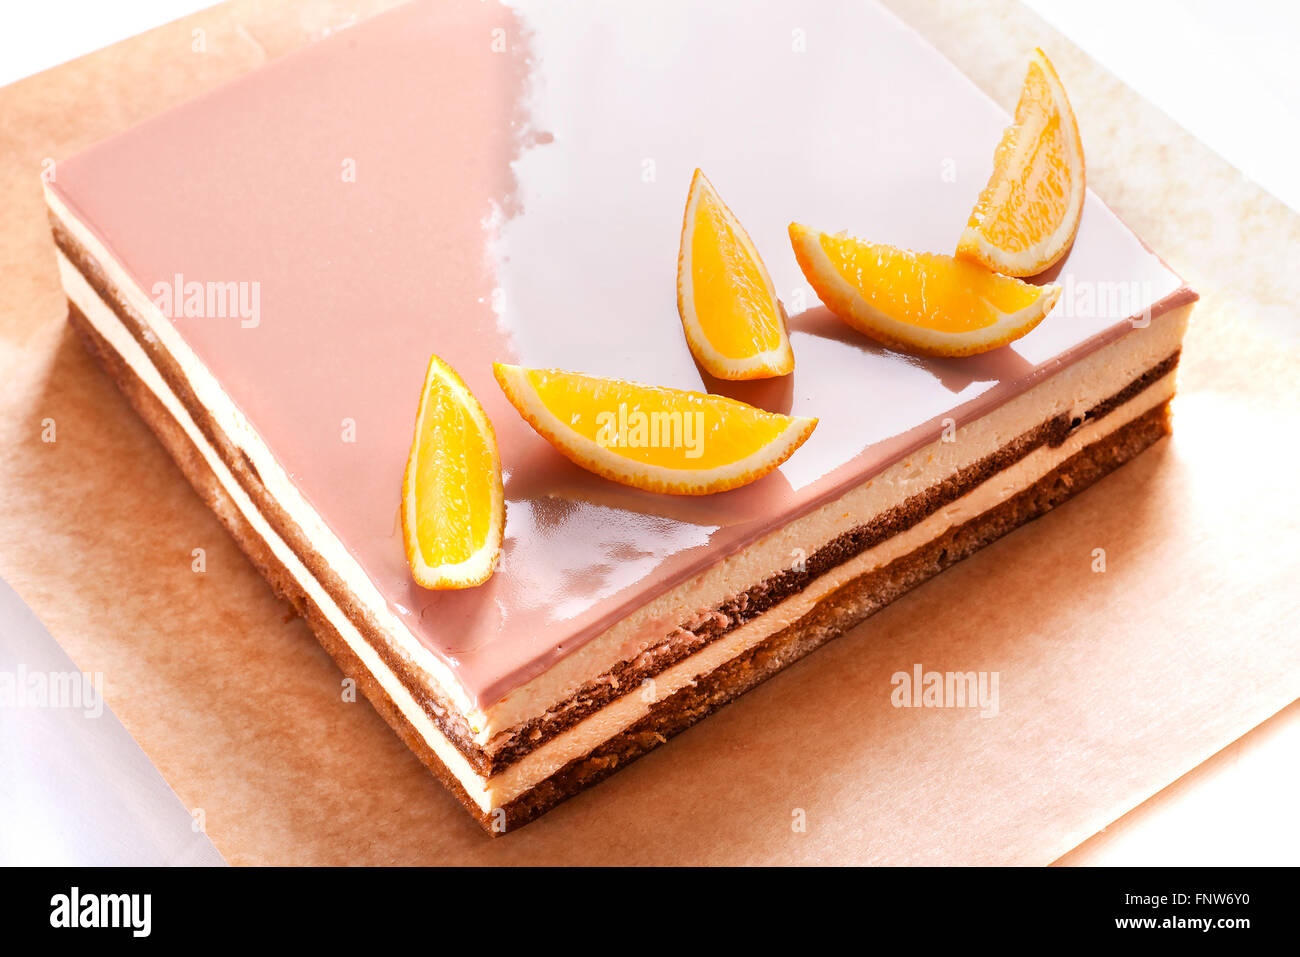 Pastry: Orange Cake with Jellies. Isolated on white - Stock image. Stock Photo